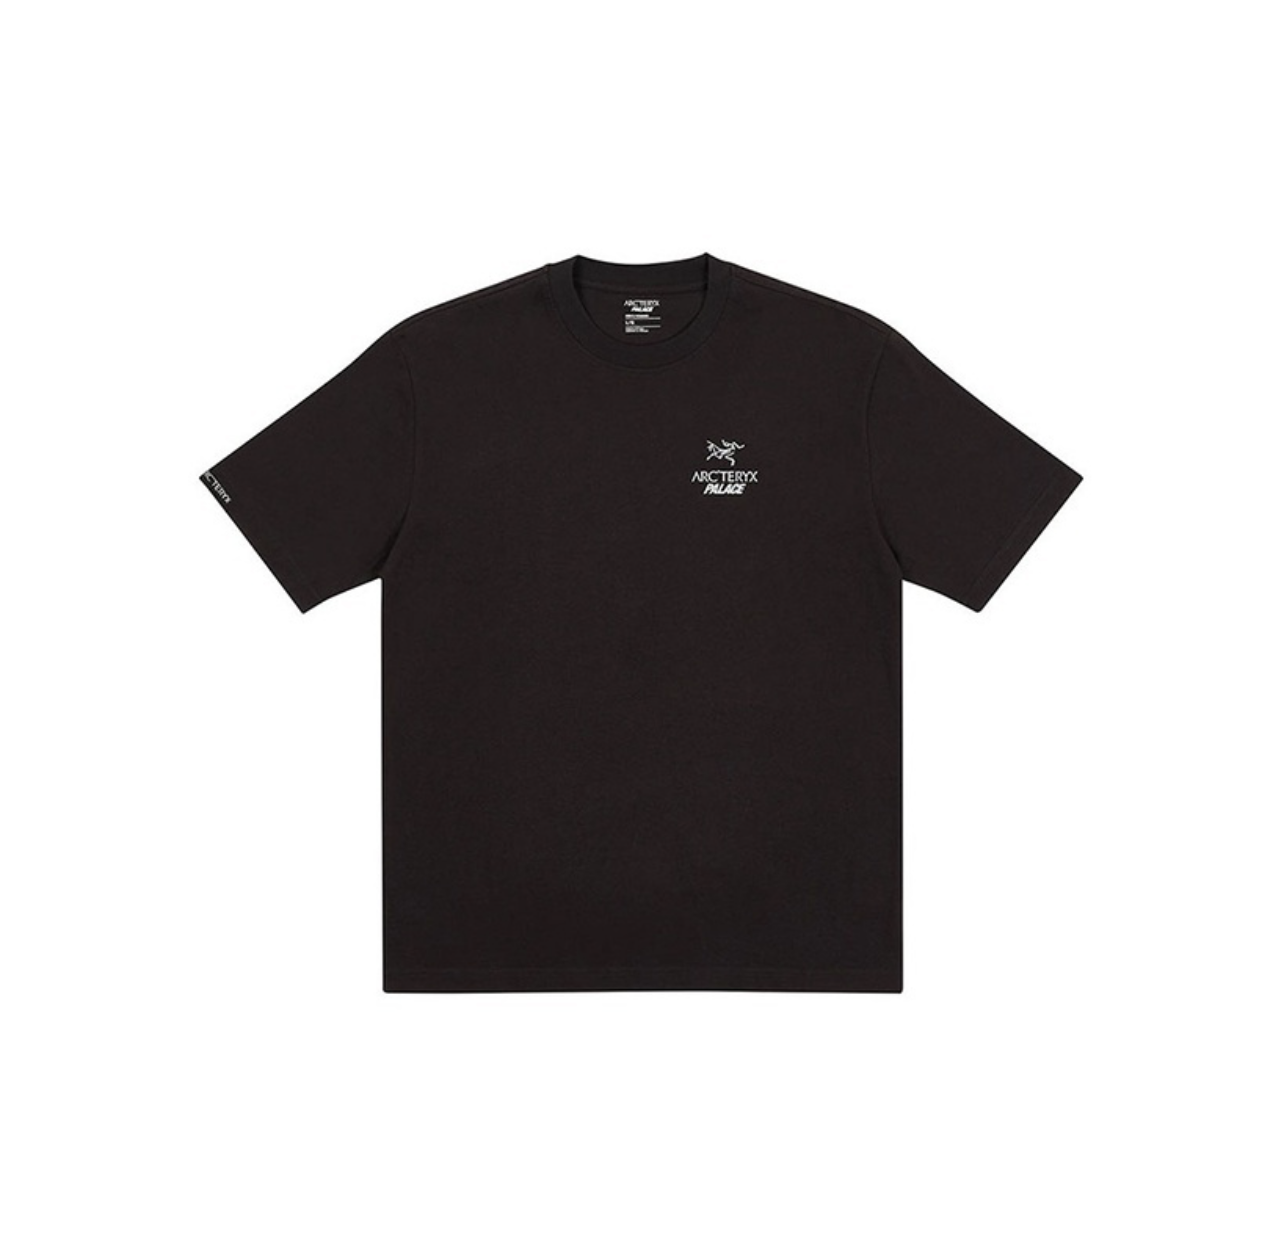 Palace Arc'Teryx T-shirt ( BLACK )